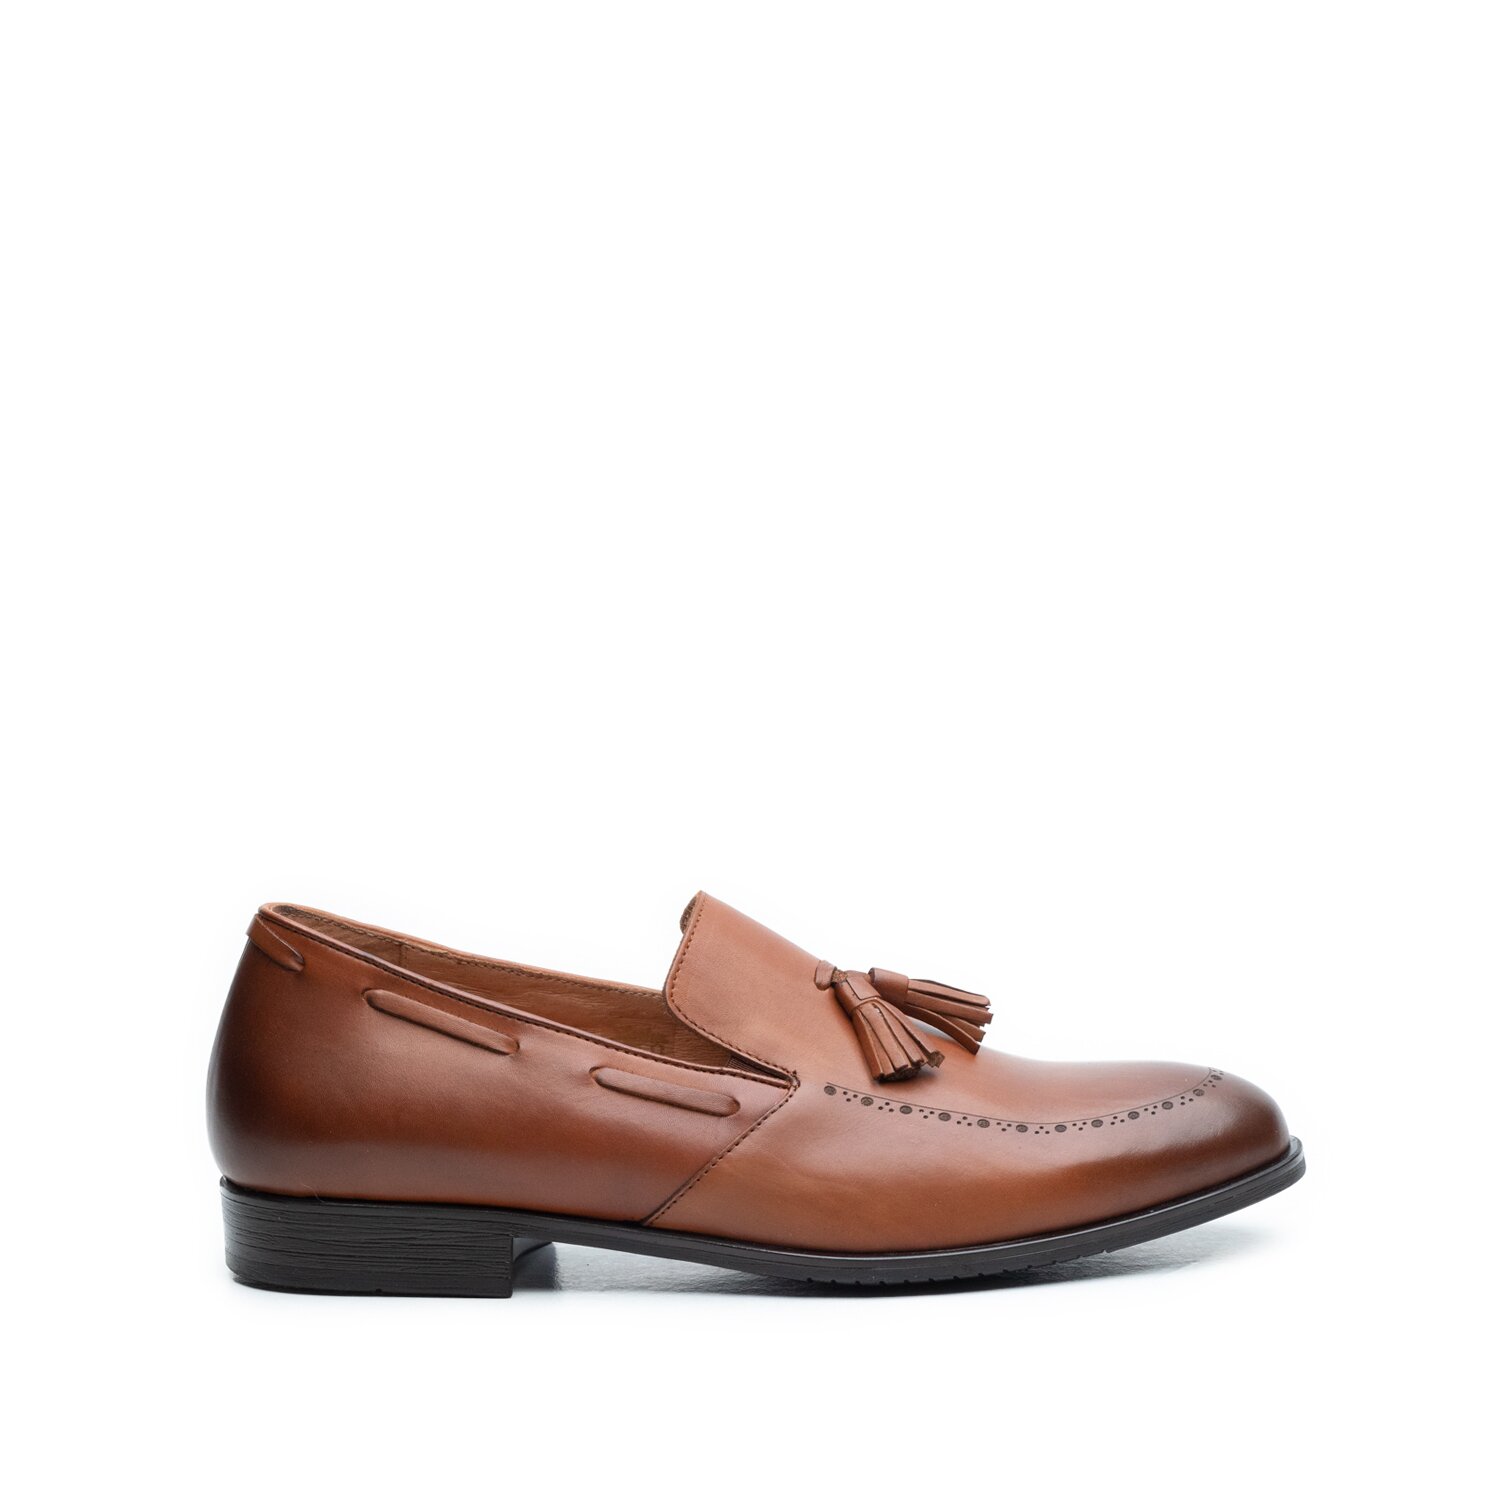 Pantofi eleganti barbati din piele naturala,Leofex - 515 Cognac Box